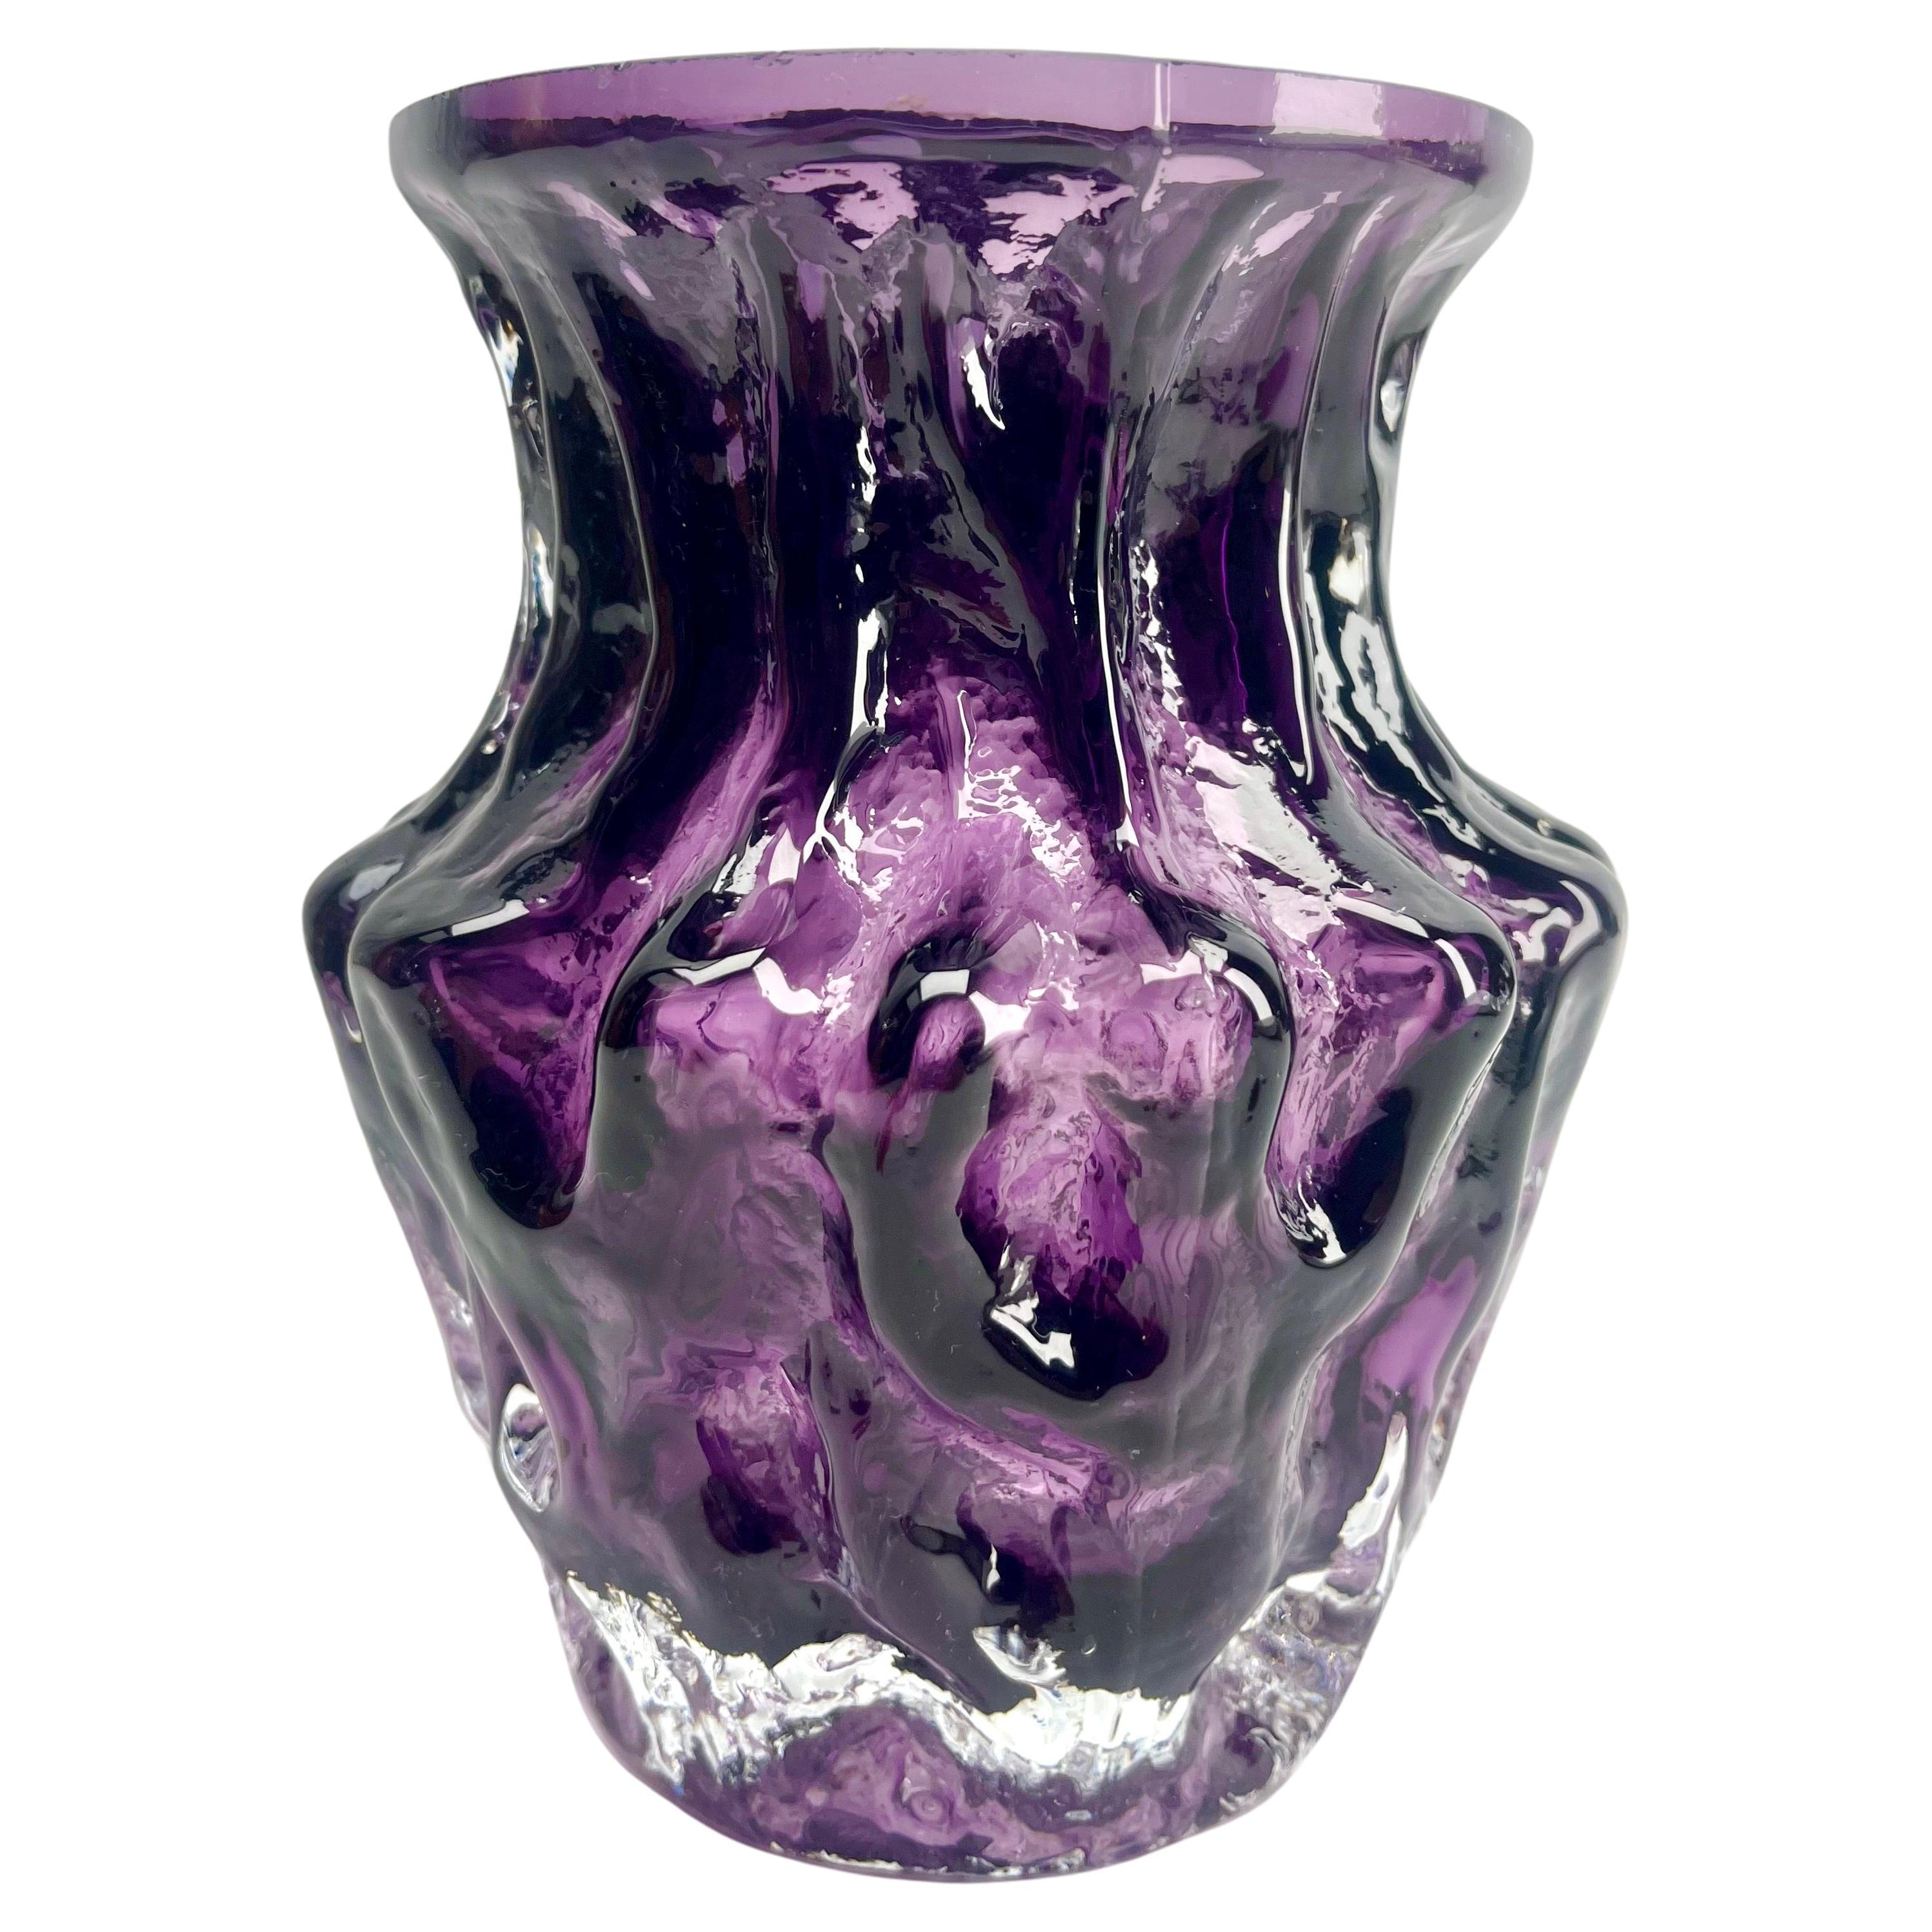 Ingrid Glas ‘Germany’ Bark Vase in Purple, 1970s